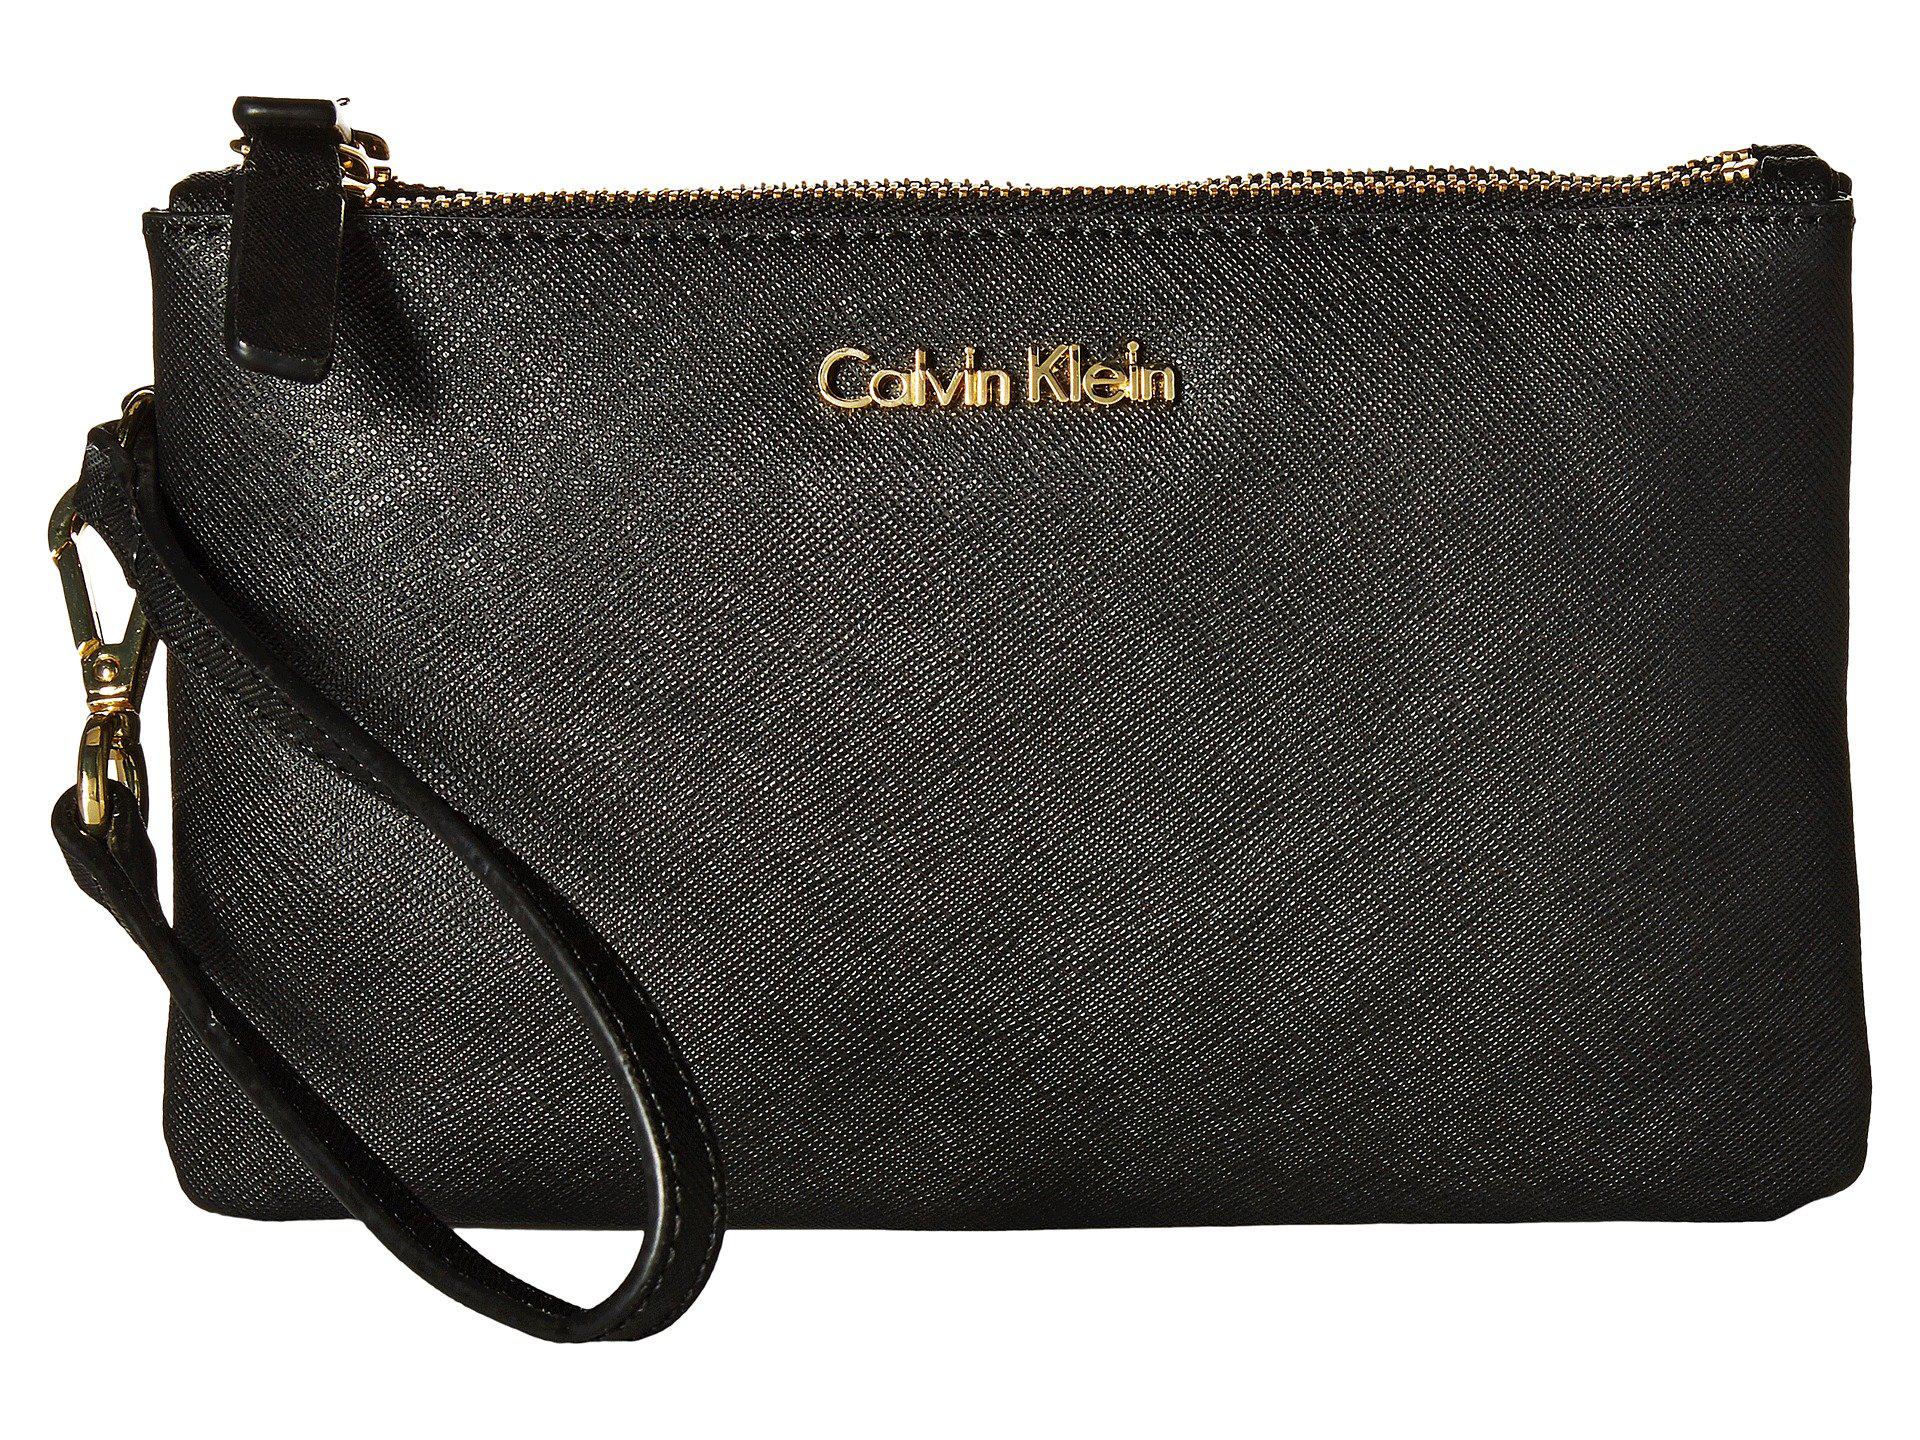 Lyst - Calvin Klein Saffiano Wristlet (black/gold) Wristlet Handbags in Black